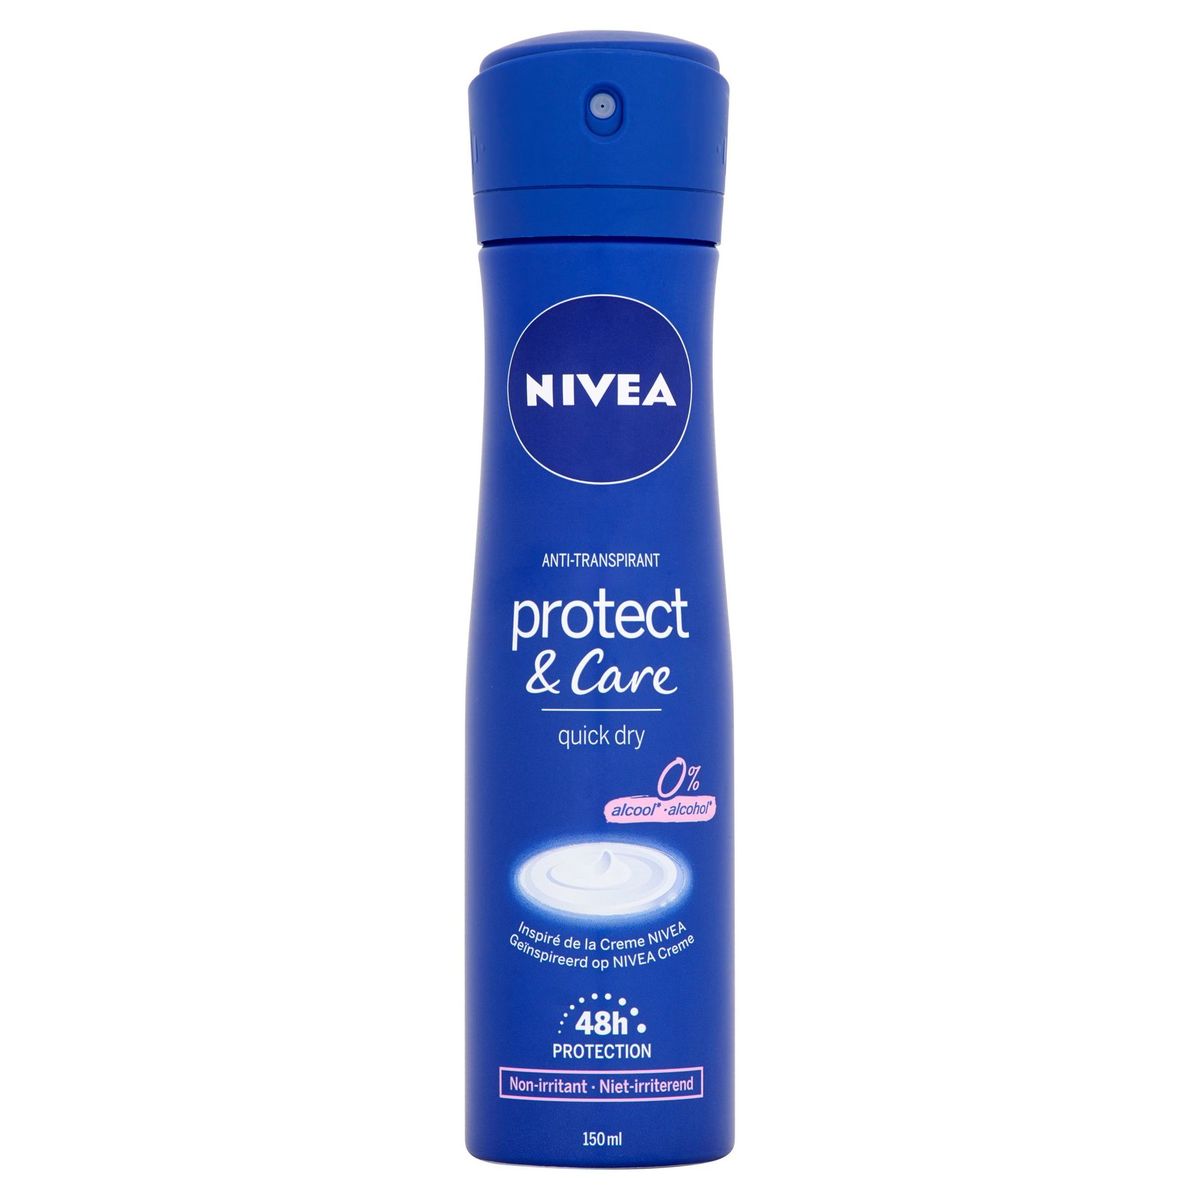 Nivea Anti-Transpirant Protect & Care 48h Protection 150 ml